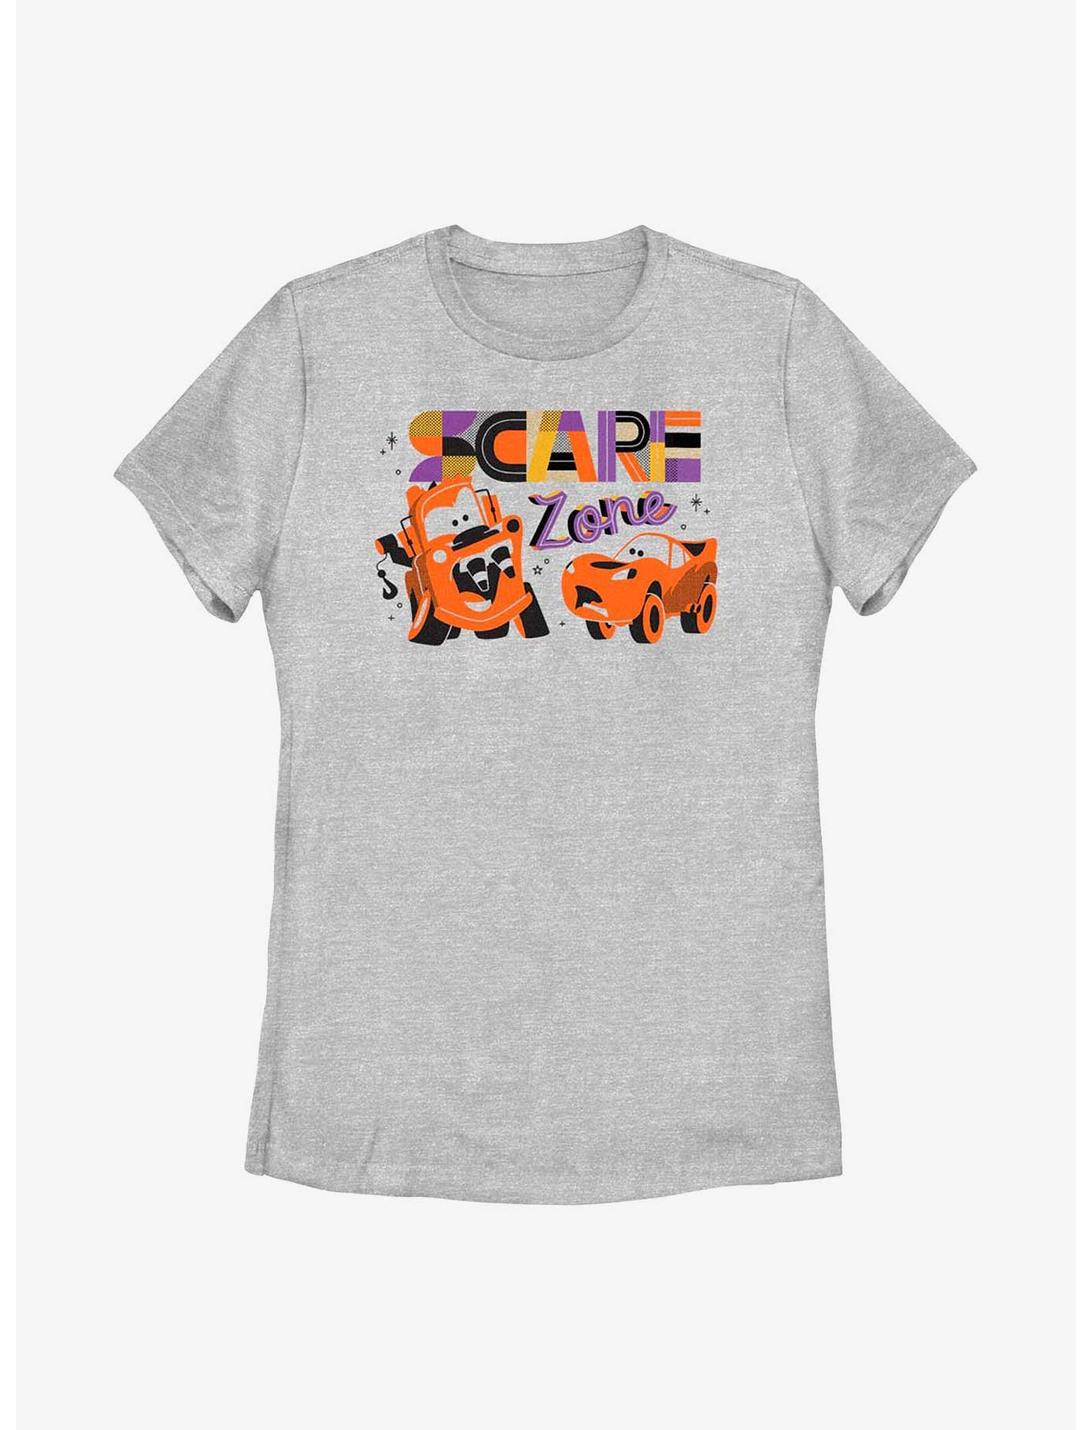 Disney Pixar Cars Scare Zone Womens T-Shirt, ATH HTR, hi-res